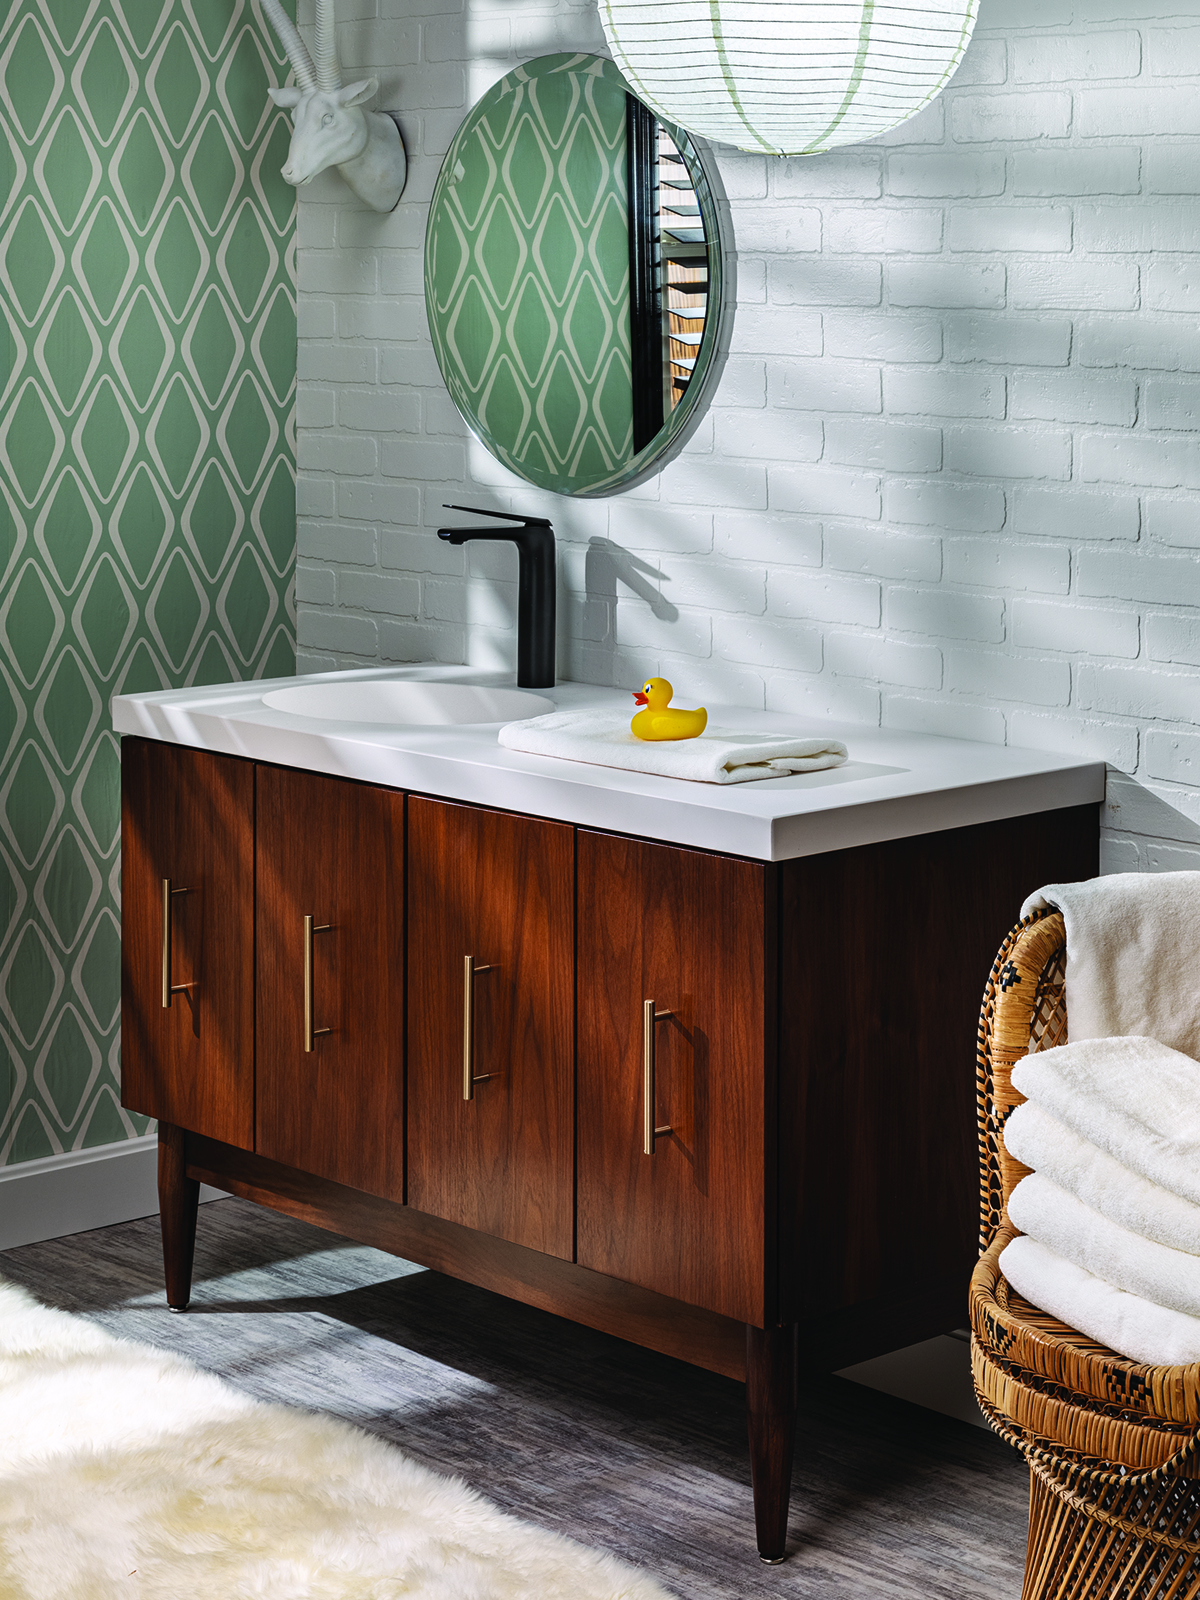 furniture style bathroom vanity cabinetry trend